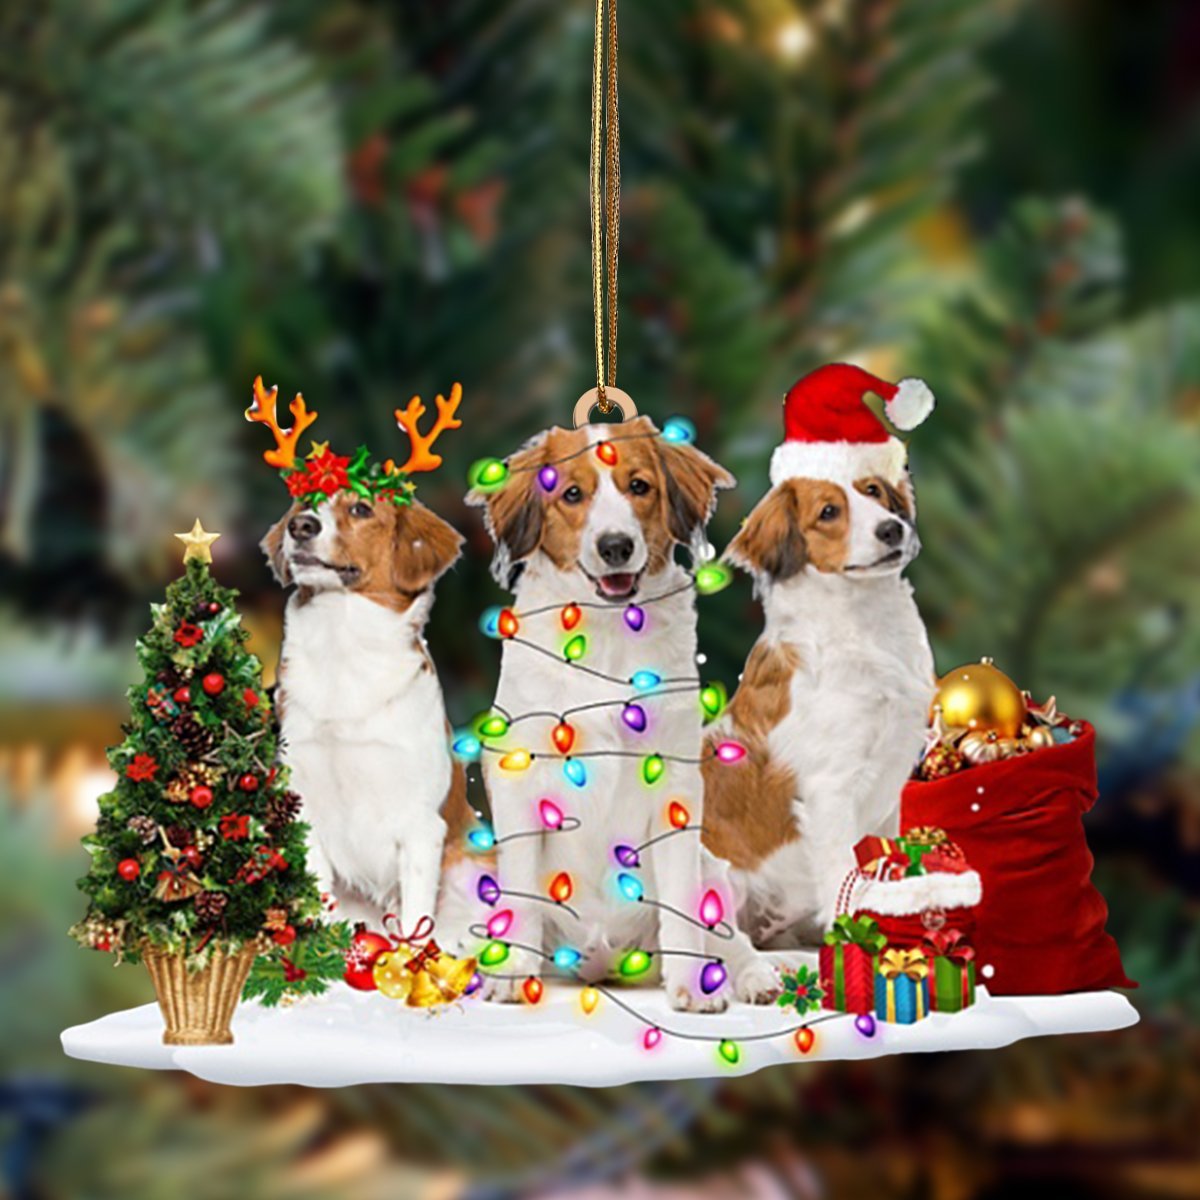 Kooikerhondje-Christmas Dog Friends Hanging Ornament